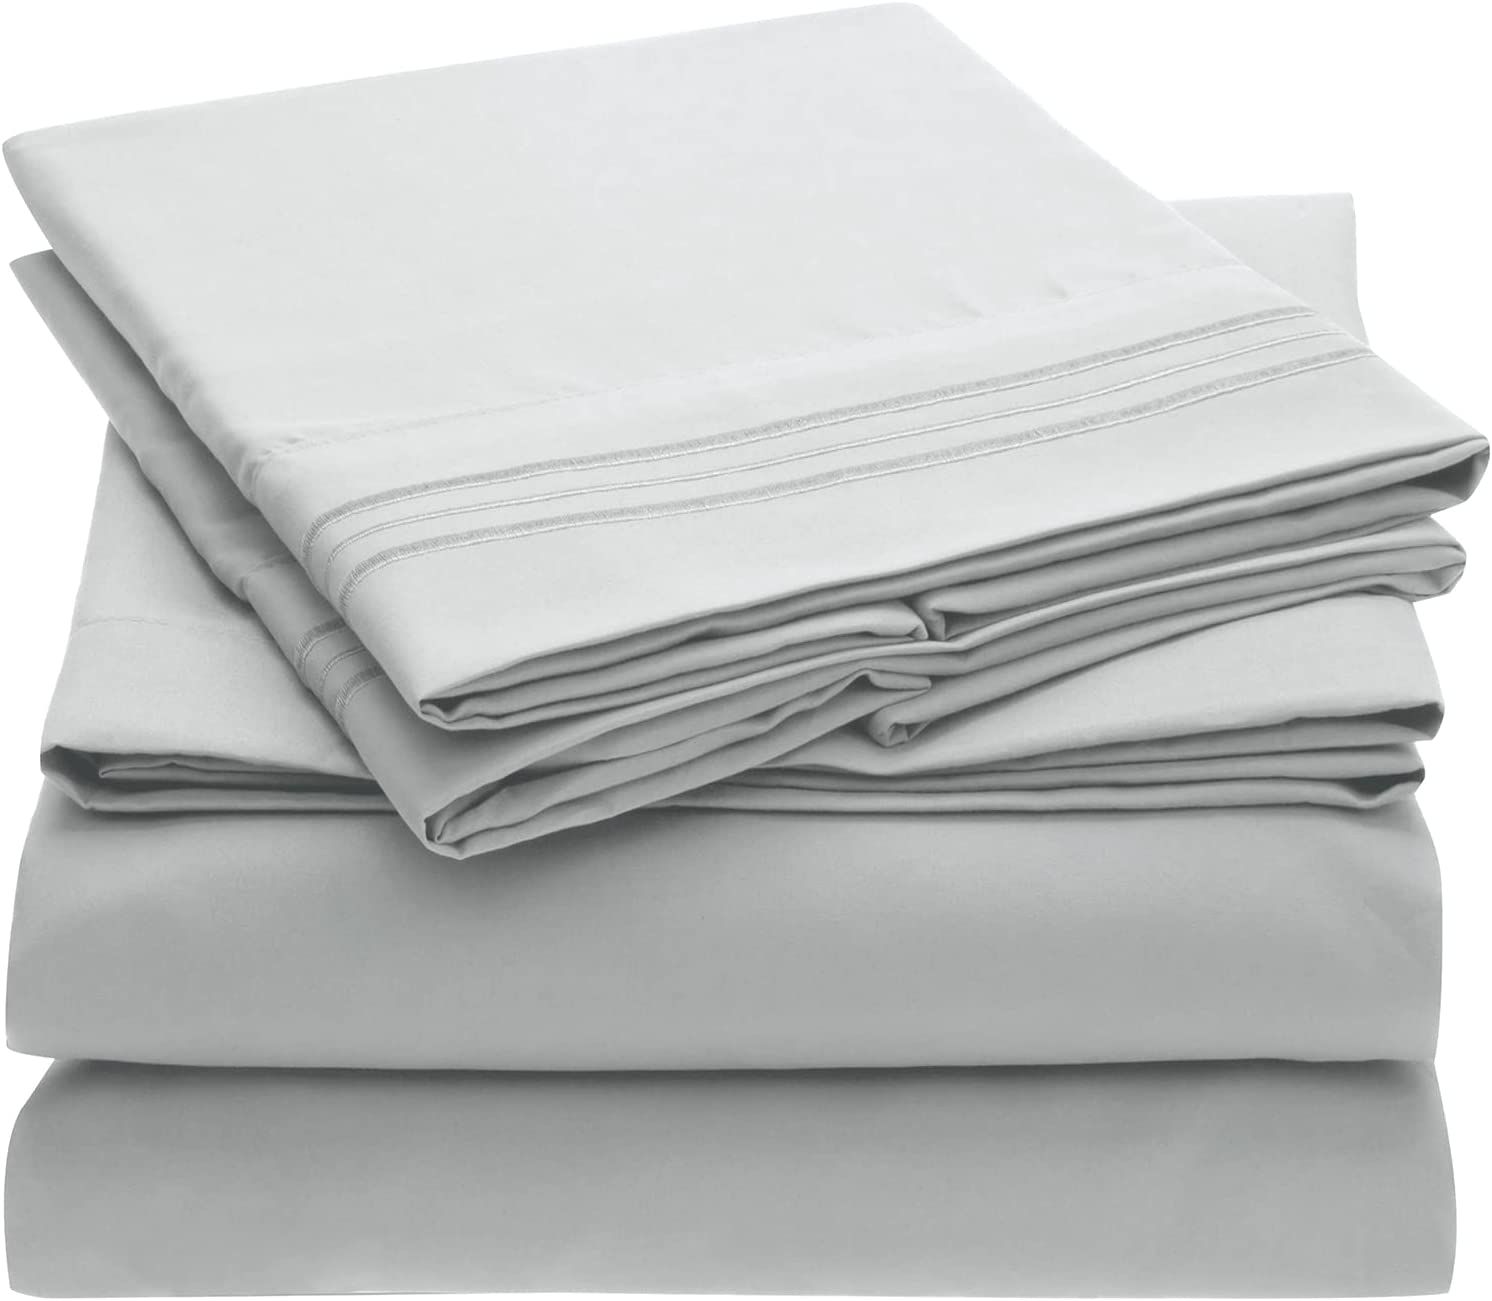 Mellanni King Size Sheet Set - Hotel Luxury 1800 Bedding Sheets & Pillowcases - Extra Soft Coolin... | Amazon (US)